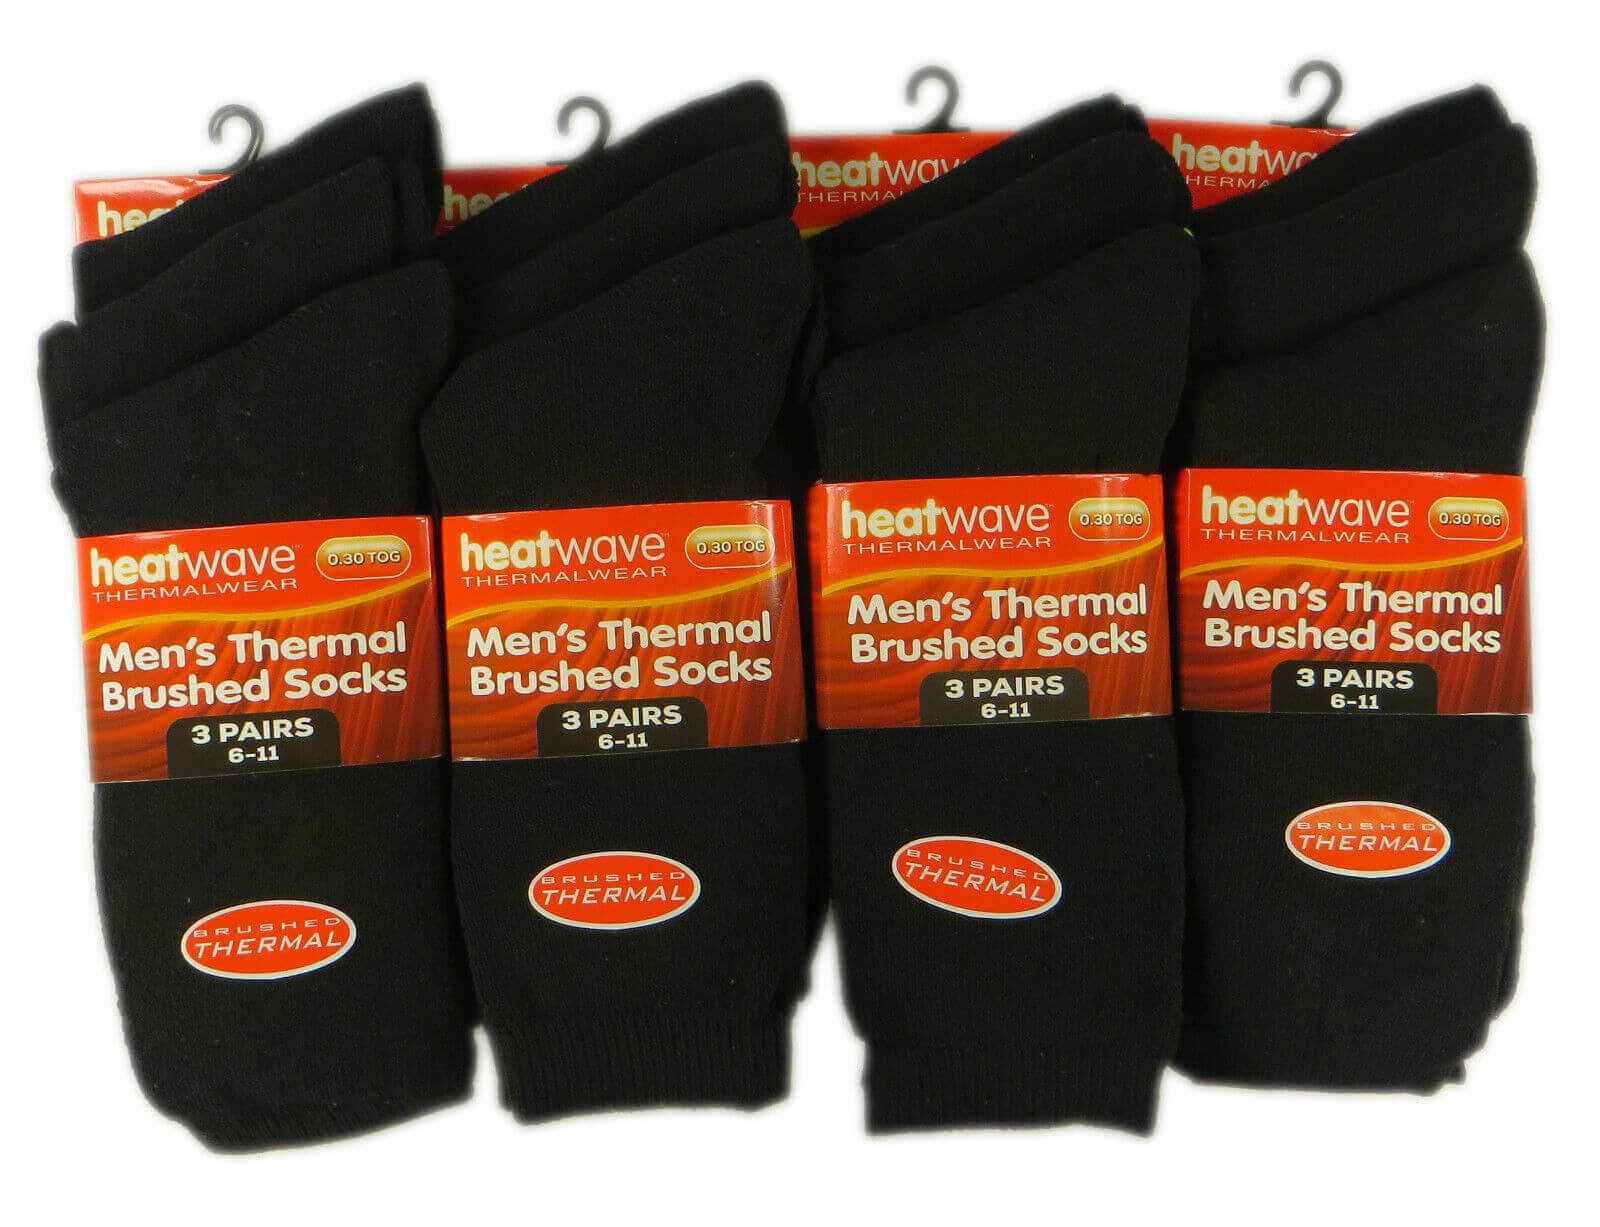 Heatwave® 12 Pairs Men's Black Thermal Socks, Ultimate Warm Work Boot Socks. Buy now for £10.00. A Socks by Heatwave Thermalwear. 6-11, assorted, black, boot, boot socks, boys socks, breathable, clothing, comfortable, footwear, grey, heatwave, hiking, hol